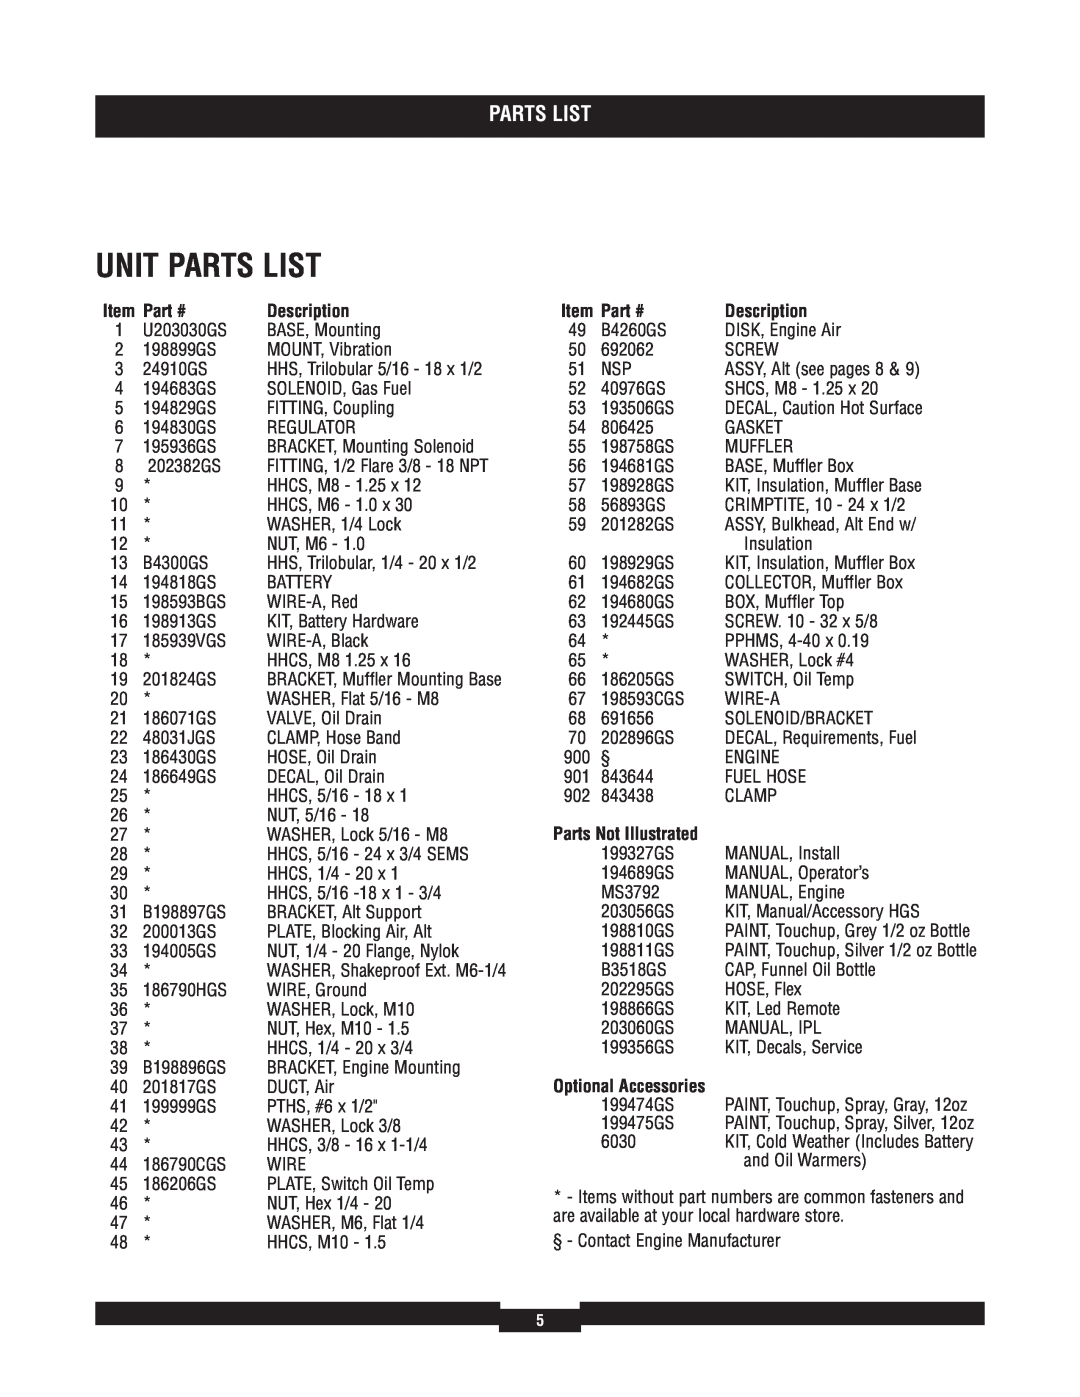 Briggs & Stratton 040229-1 manual Unit Parts List, Description, Parts Not Illustrated 